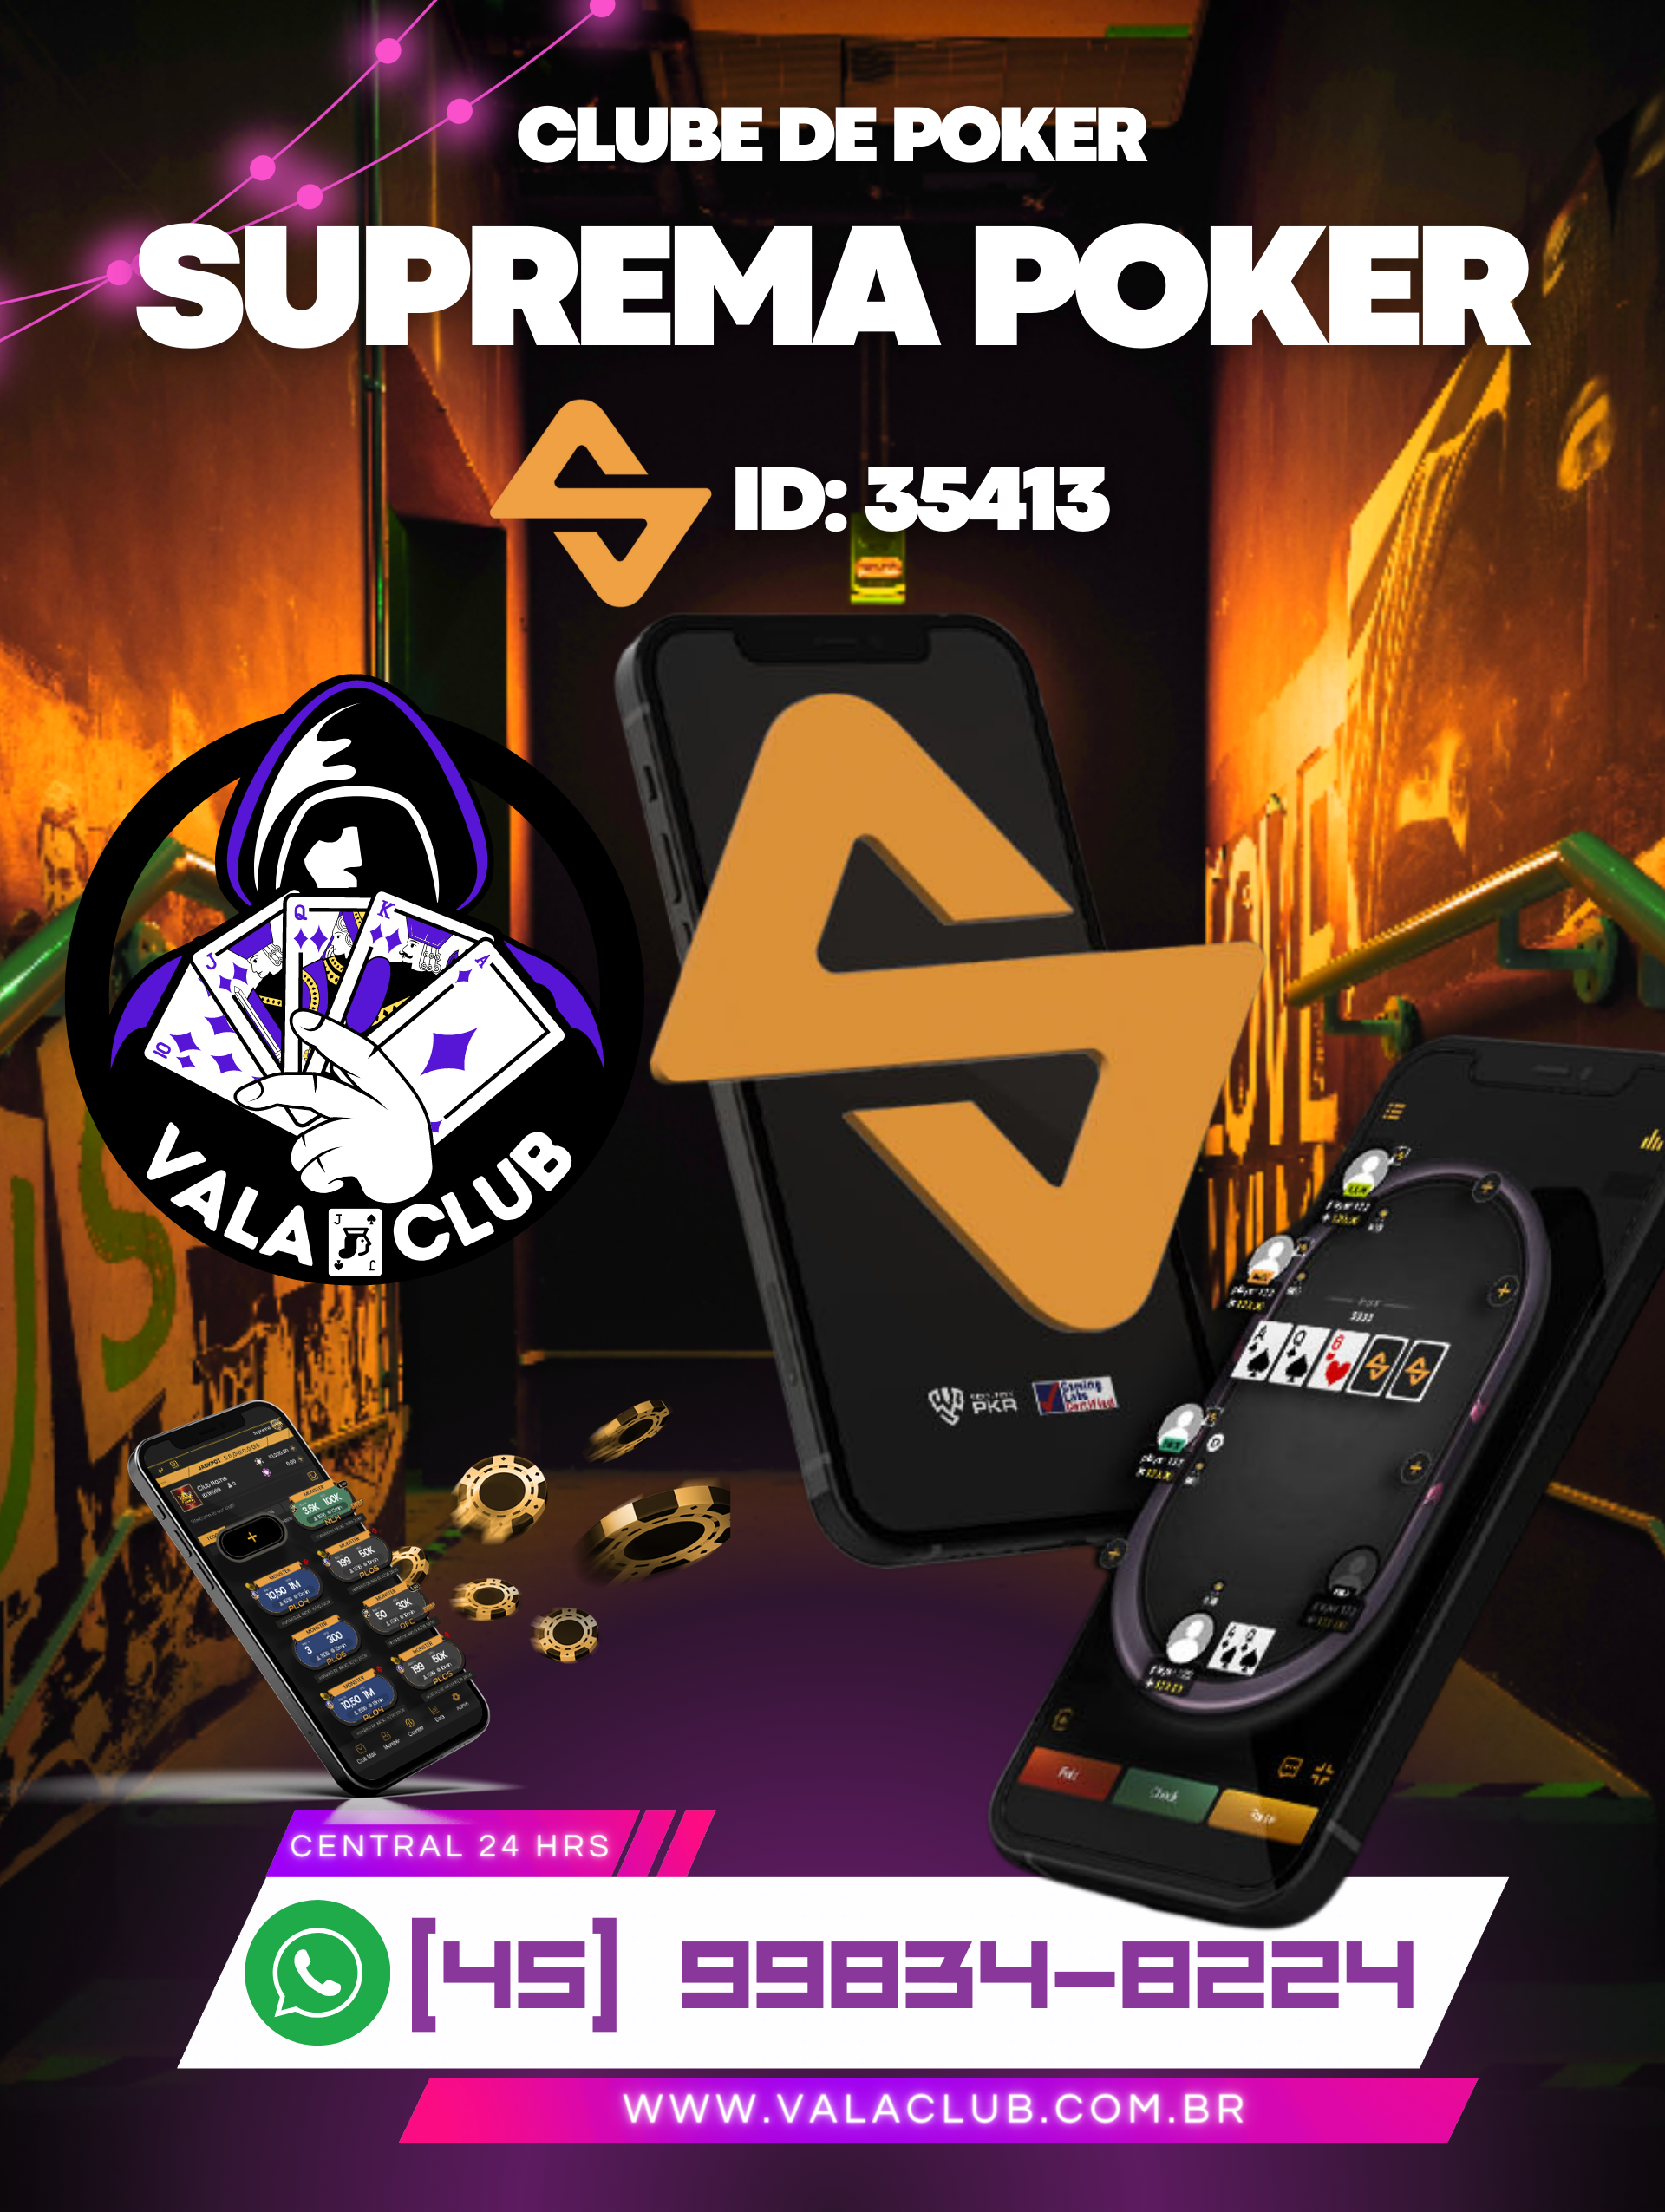 Clube de Poker Suprema - Central de Atendimento Vala Club 24 hrs